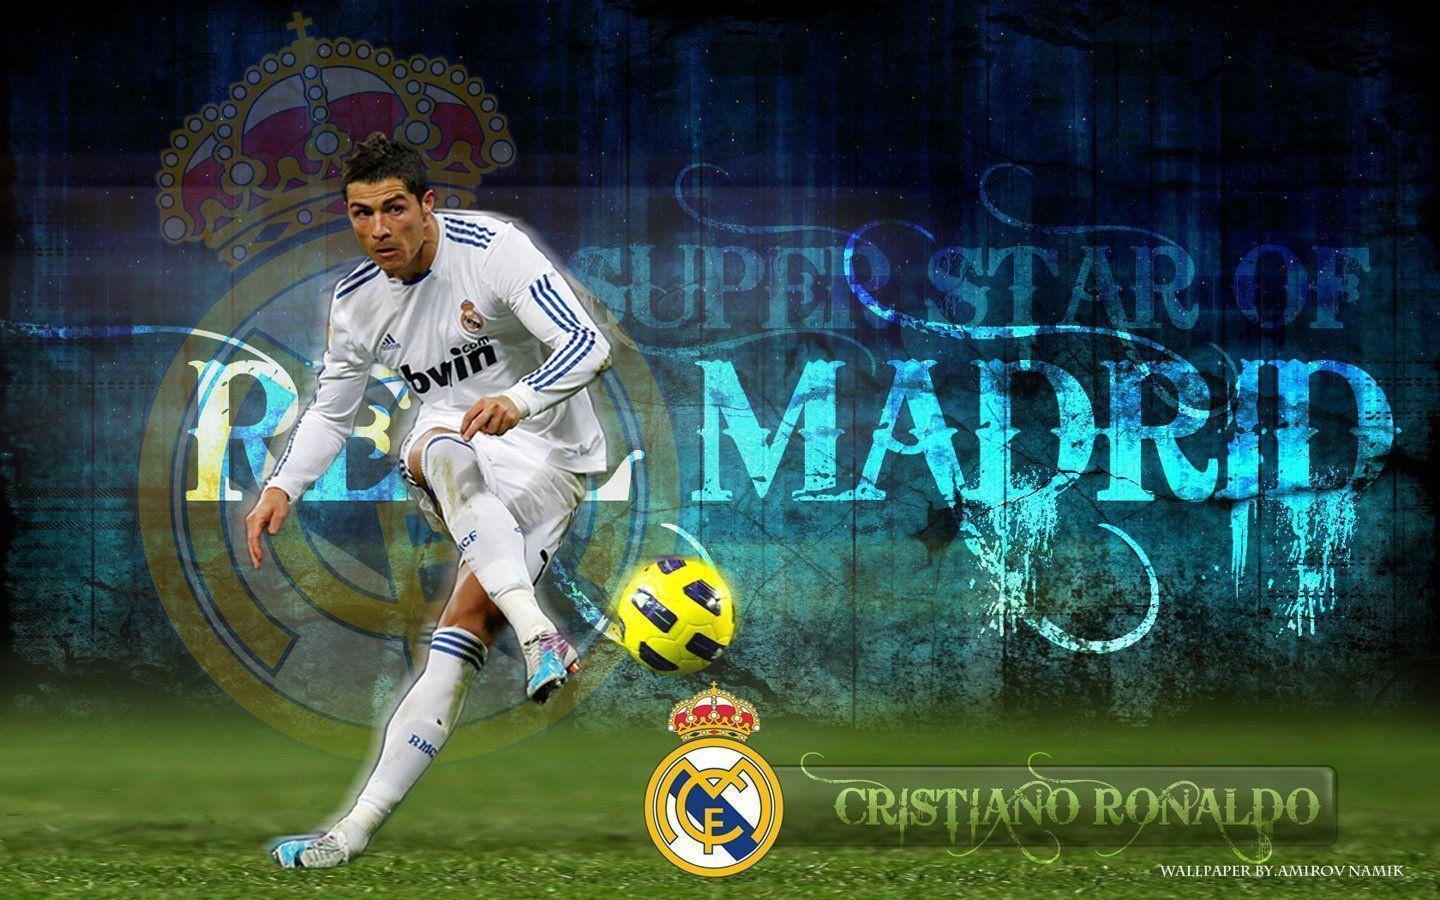 Christiano Ronaldo Real Madrid Football 1 HD Image Wallpaper